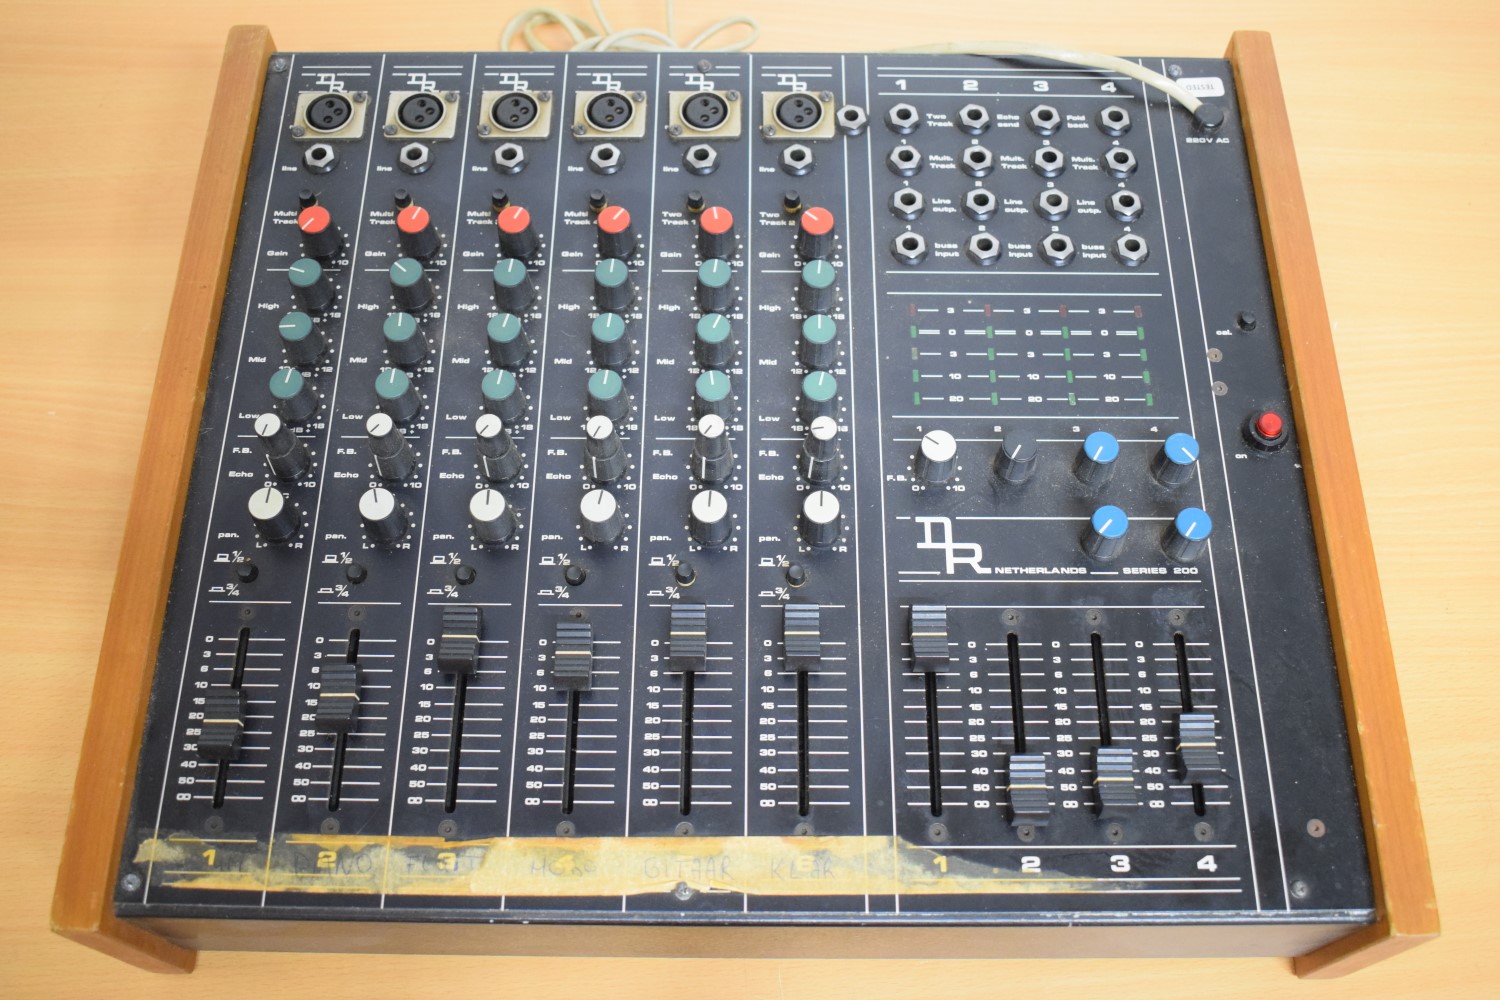 D&R Netherlands – Series 200 analog mixer